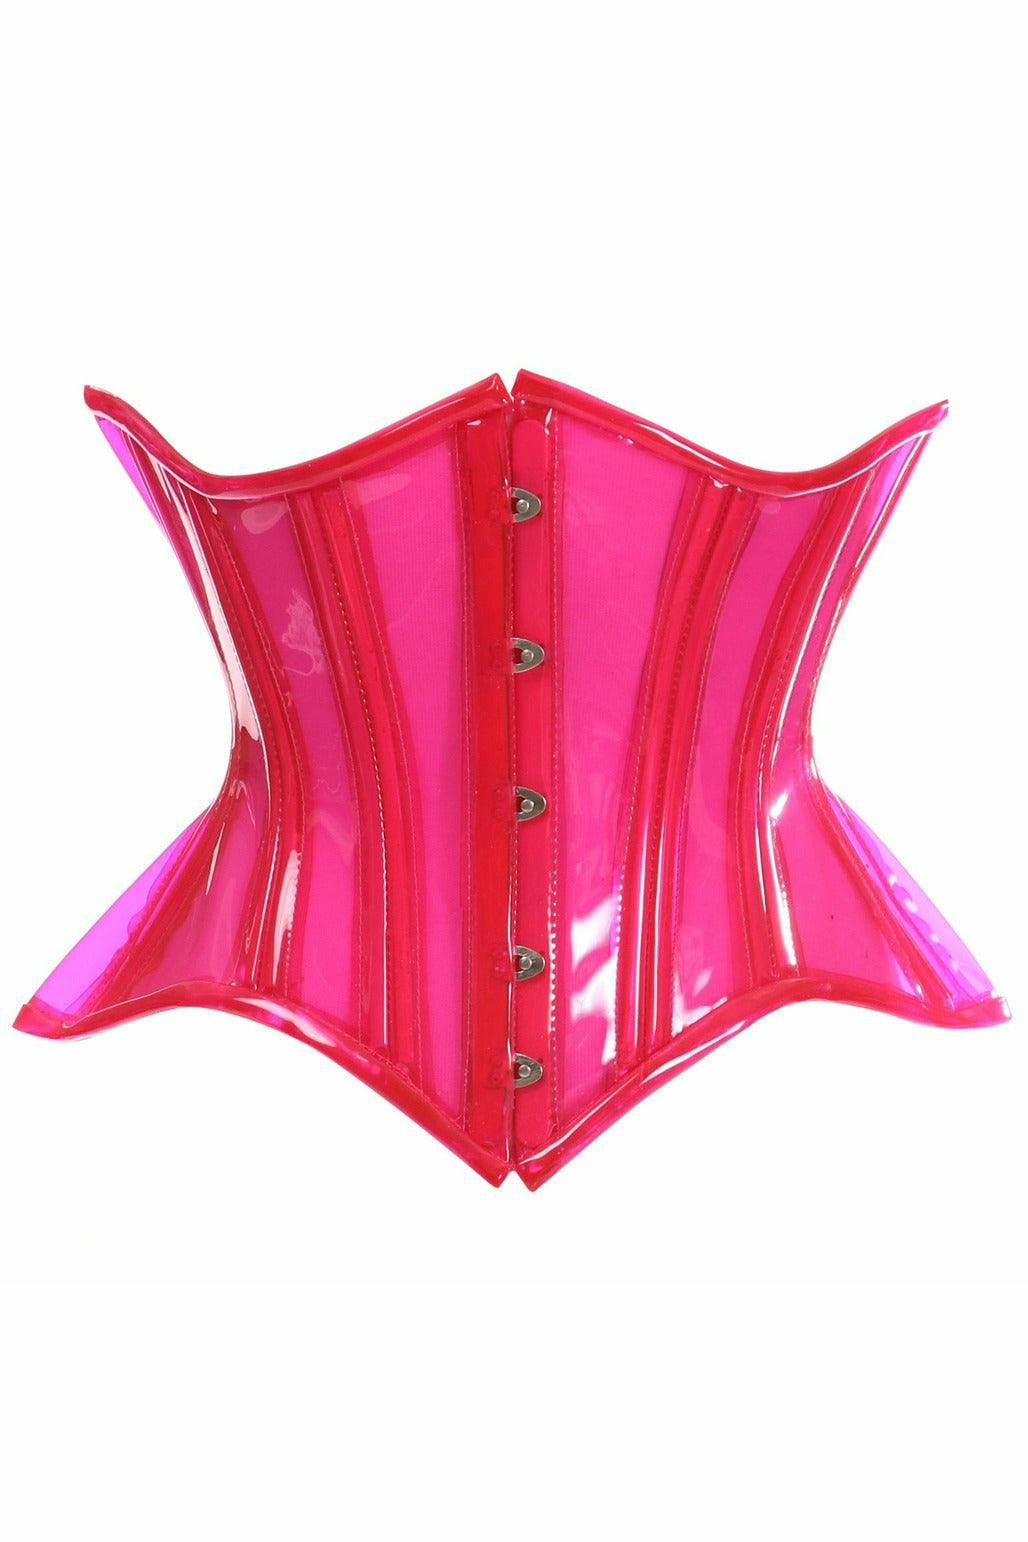 Lavish Pink Clear Curvy Underbust Waist Cincher Corset-Daisy Corsets